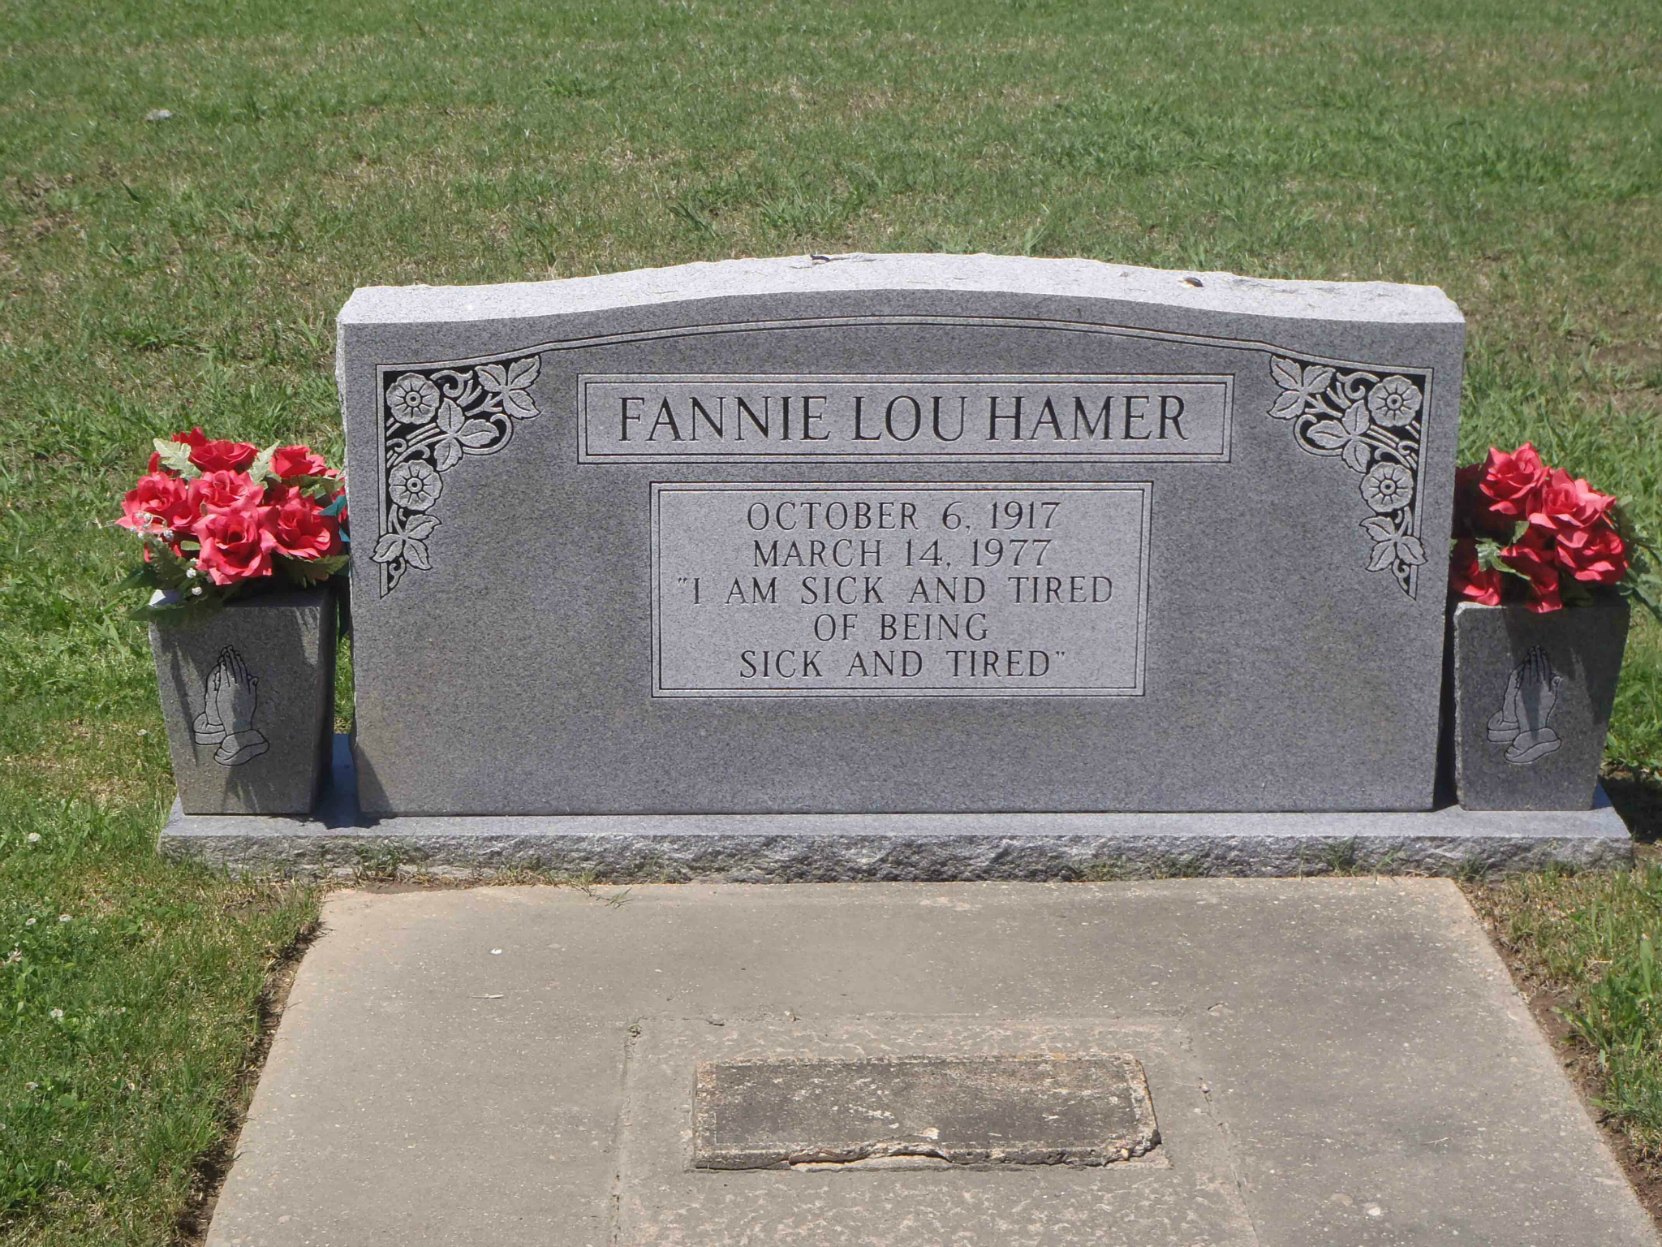 Headstone on Fanny Lou Hamer's grave, Fanny Lou Hamer Memorial Garden, Ruleville, Mississippi